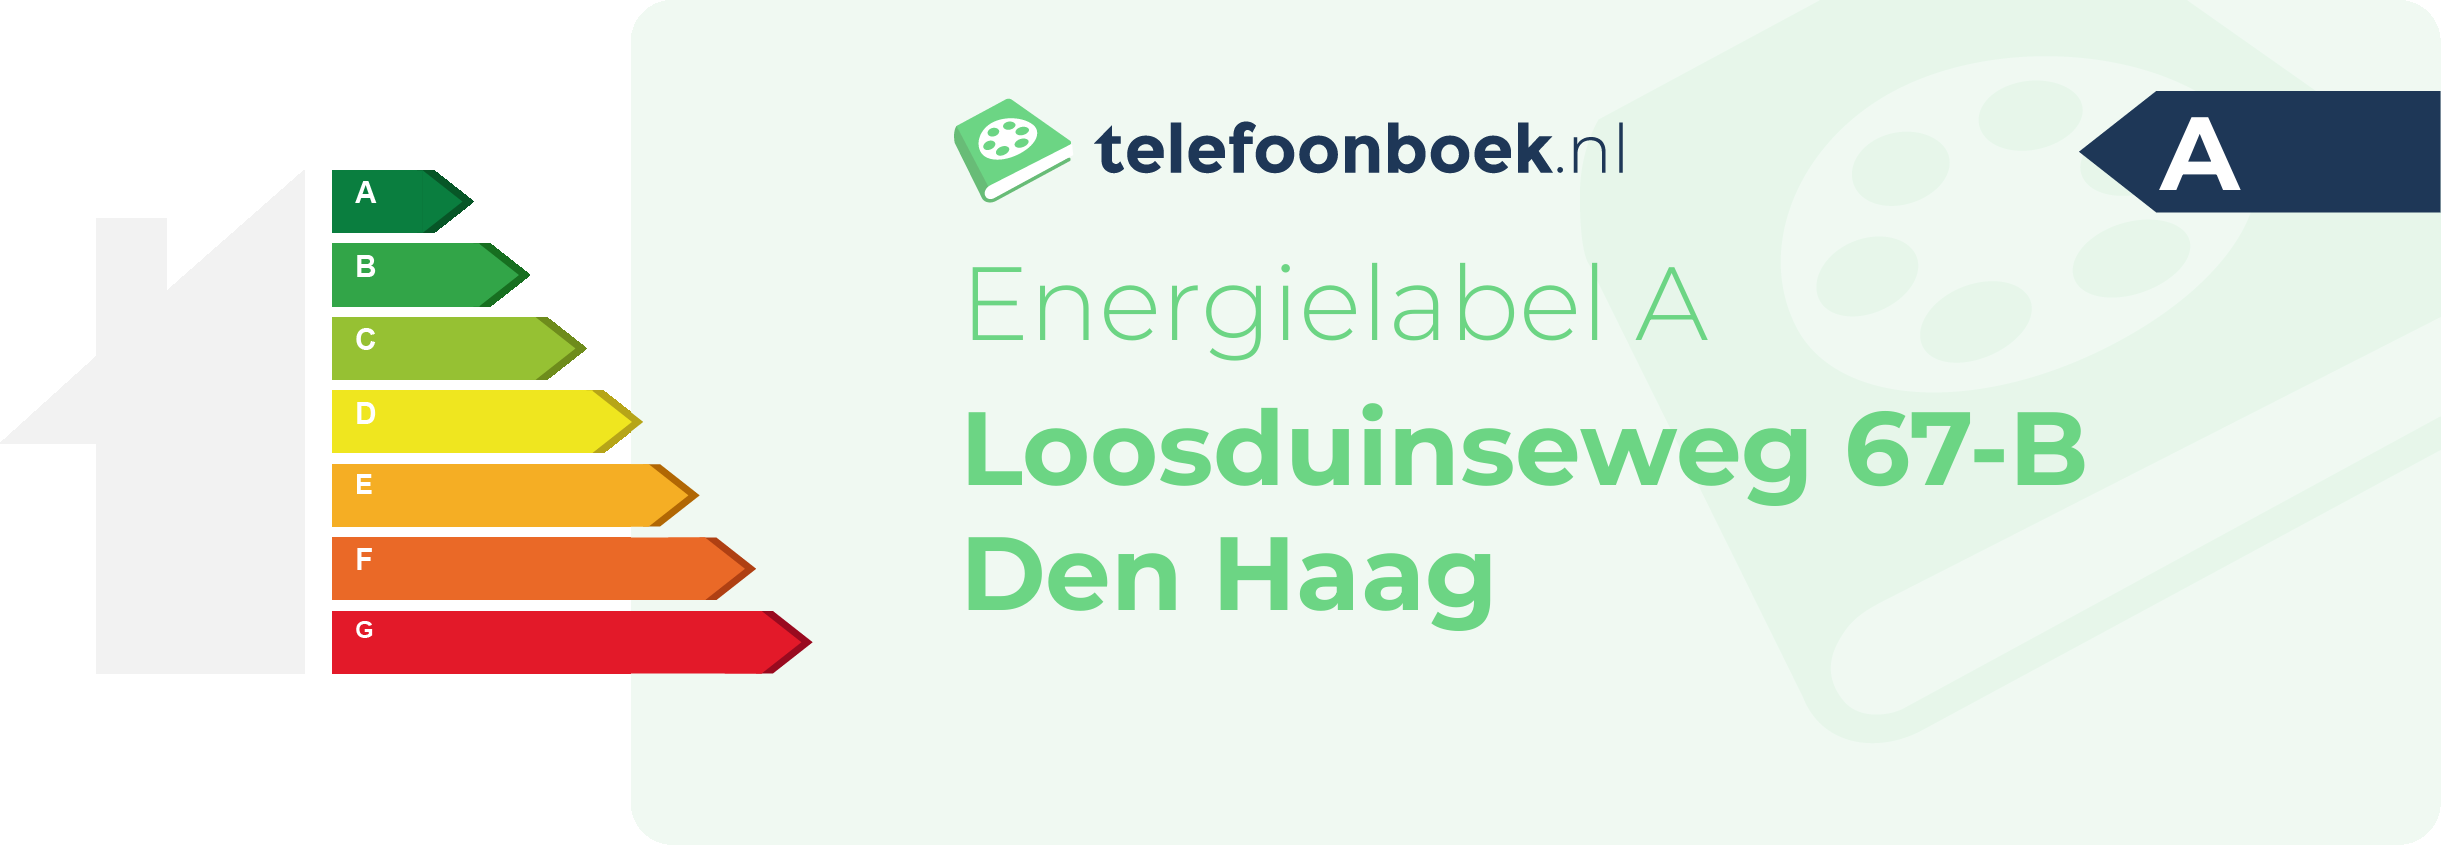 Energielabel Loosduinseweg 67-B Den Haag